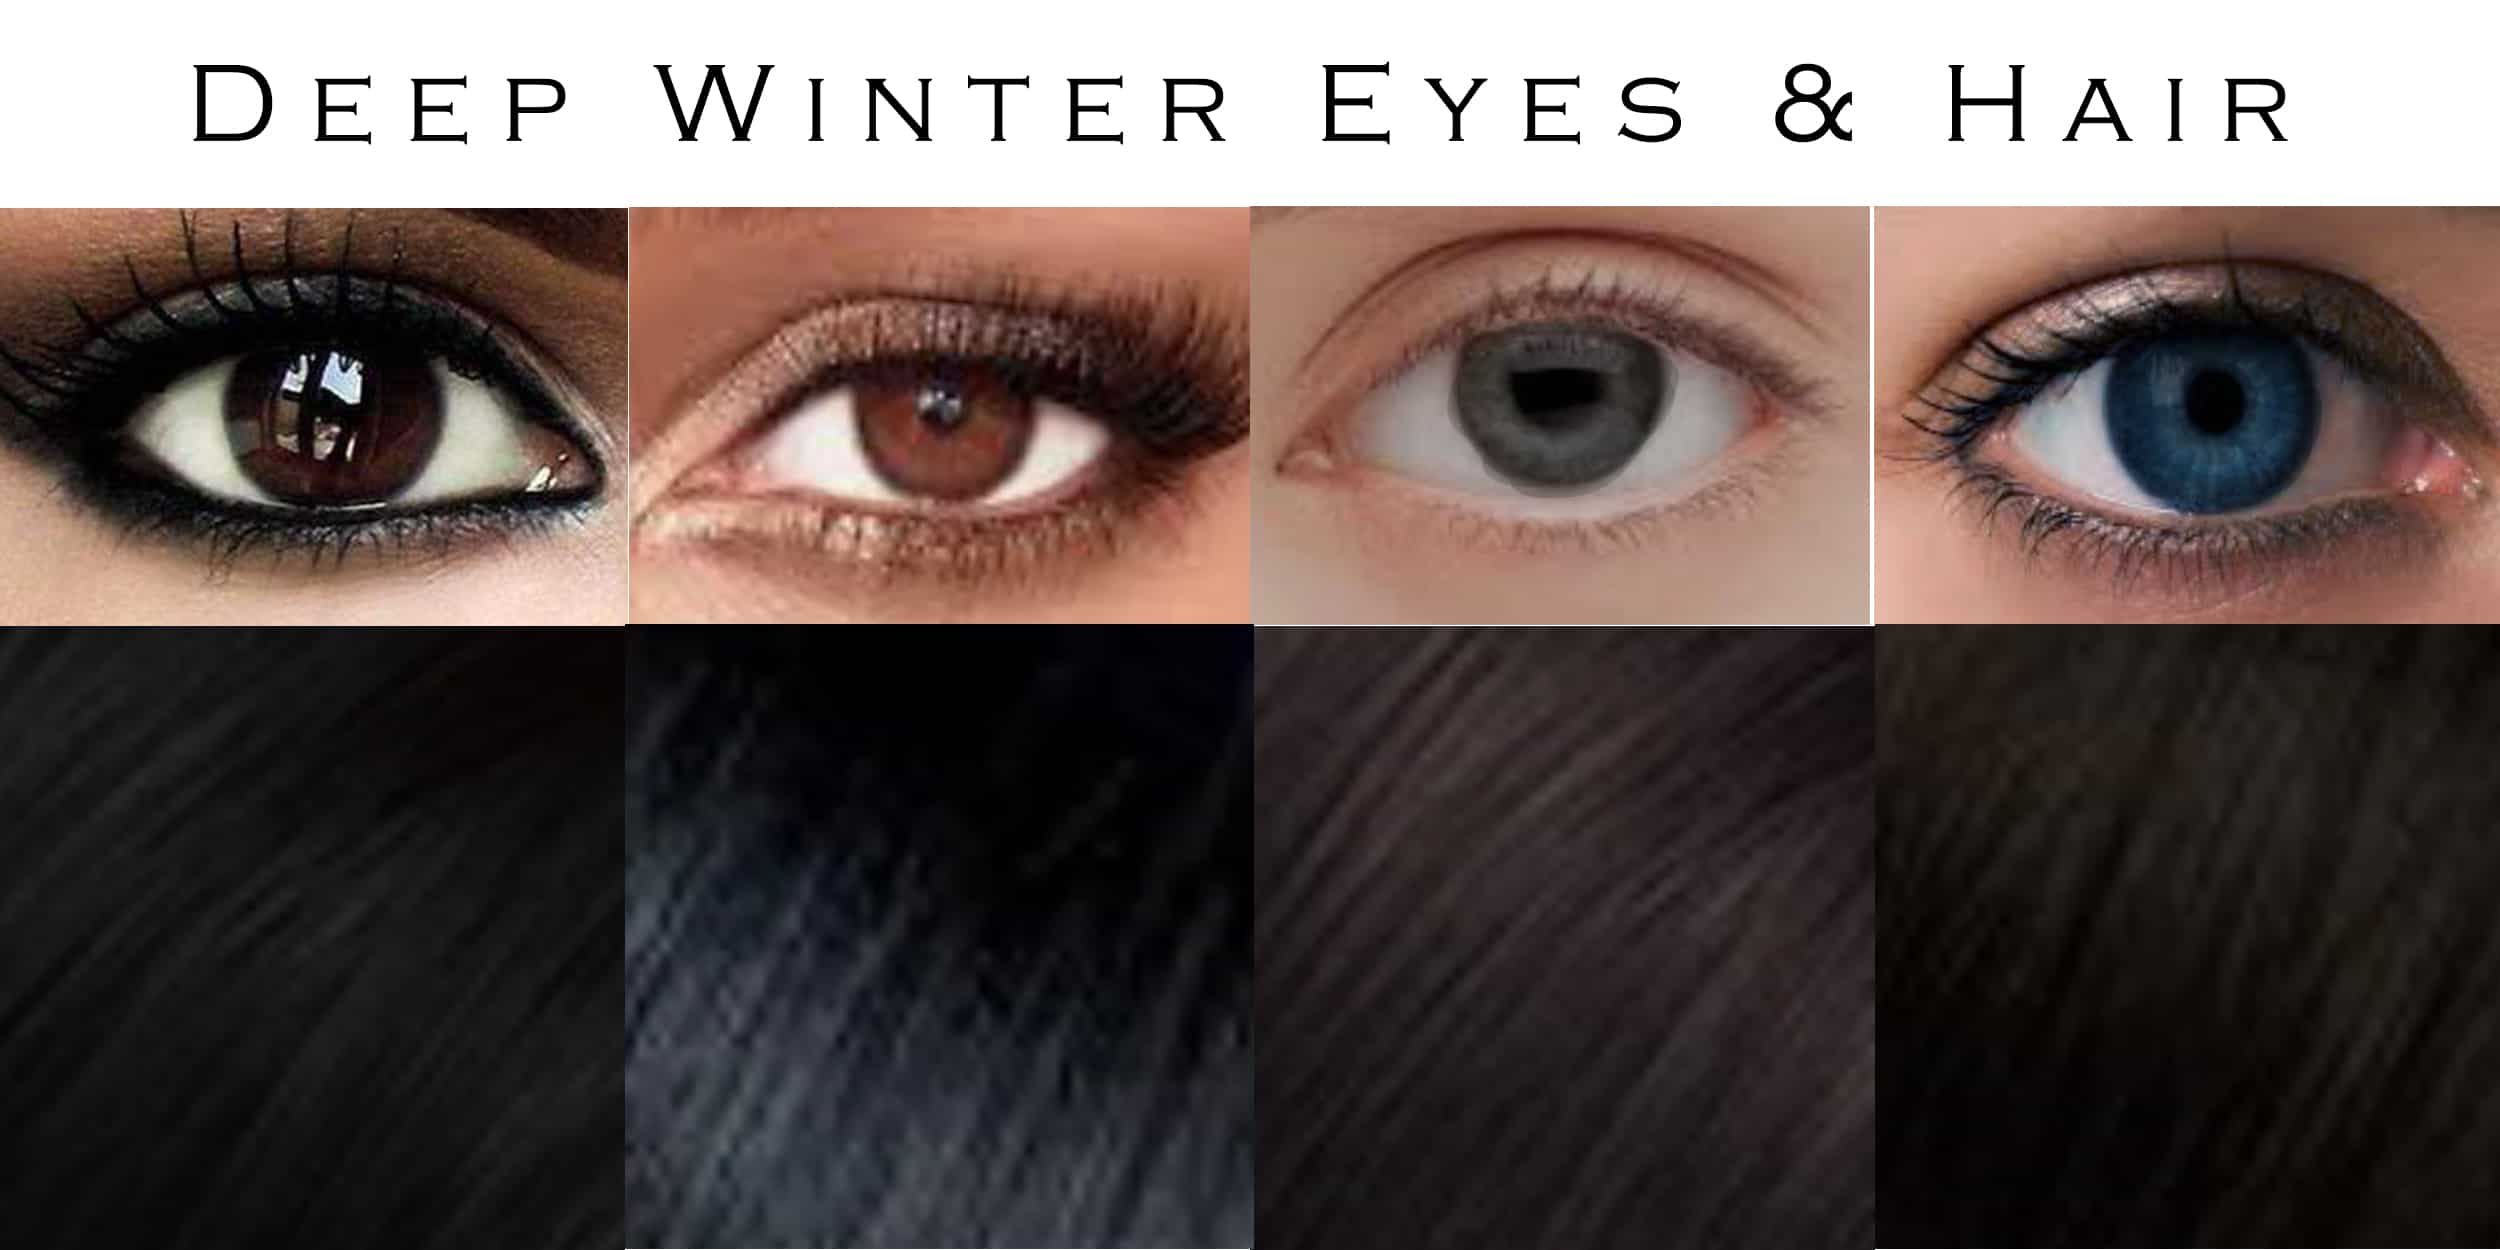 Deep Winter eyes and hair.